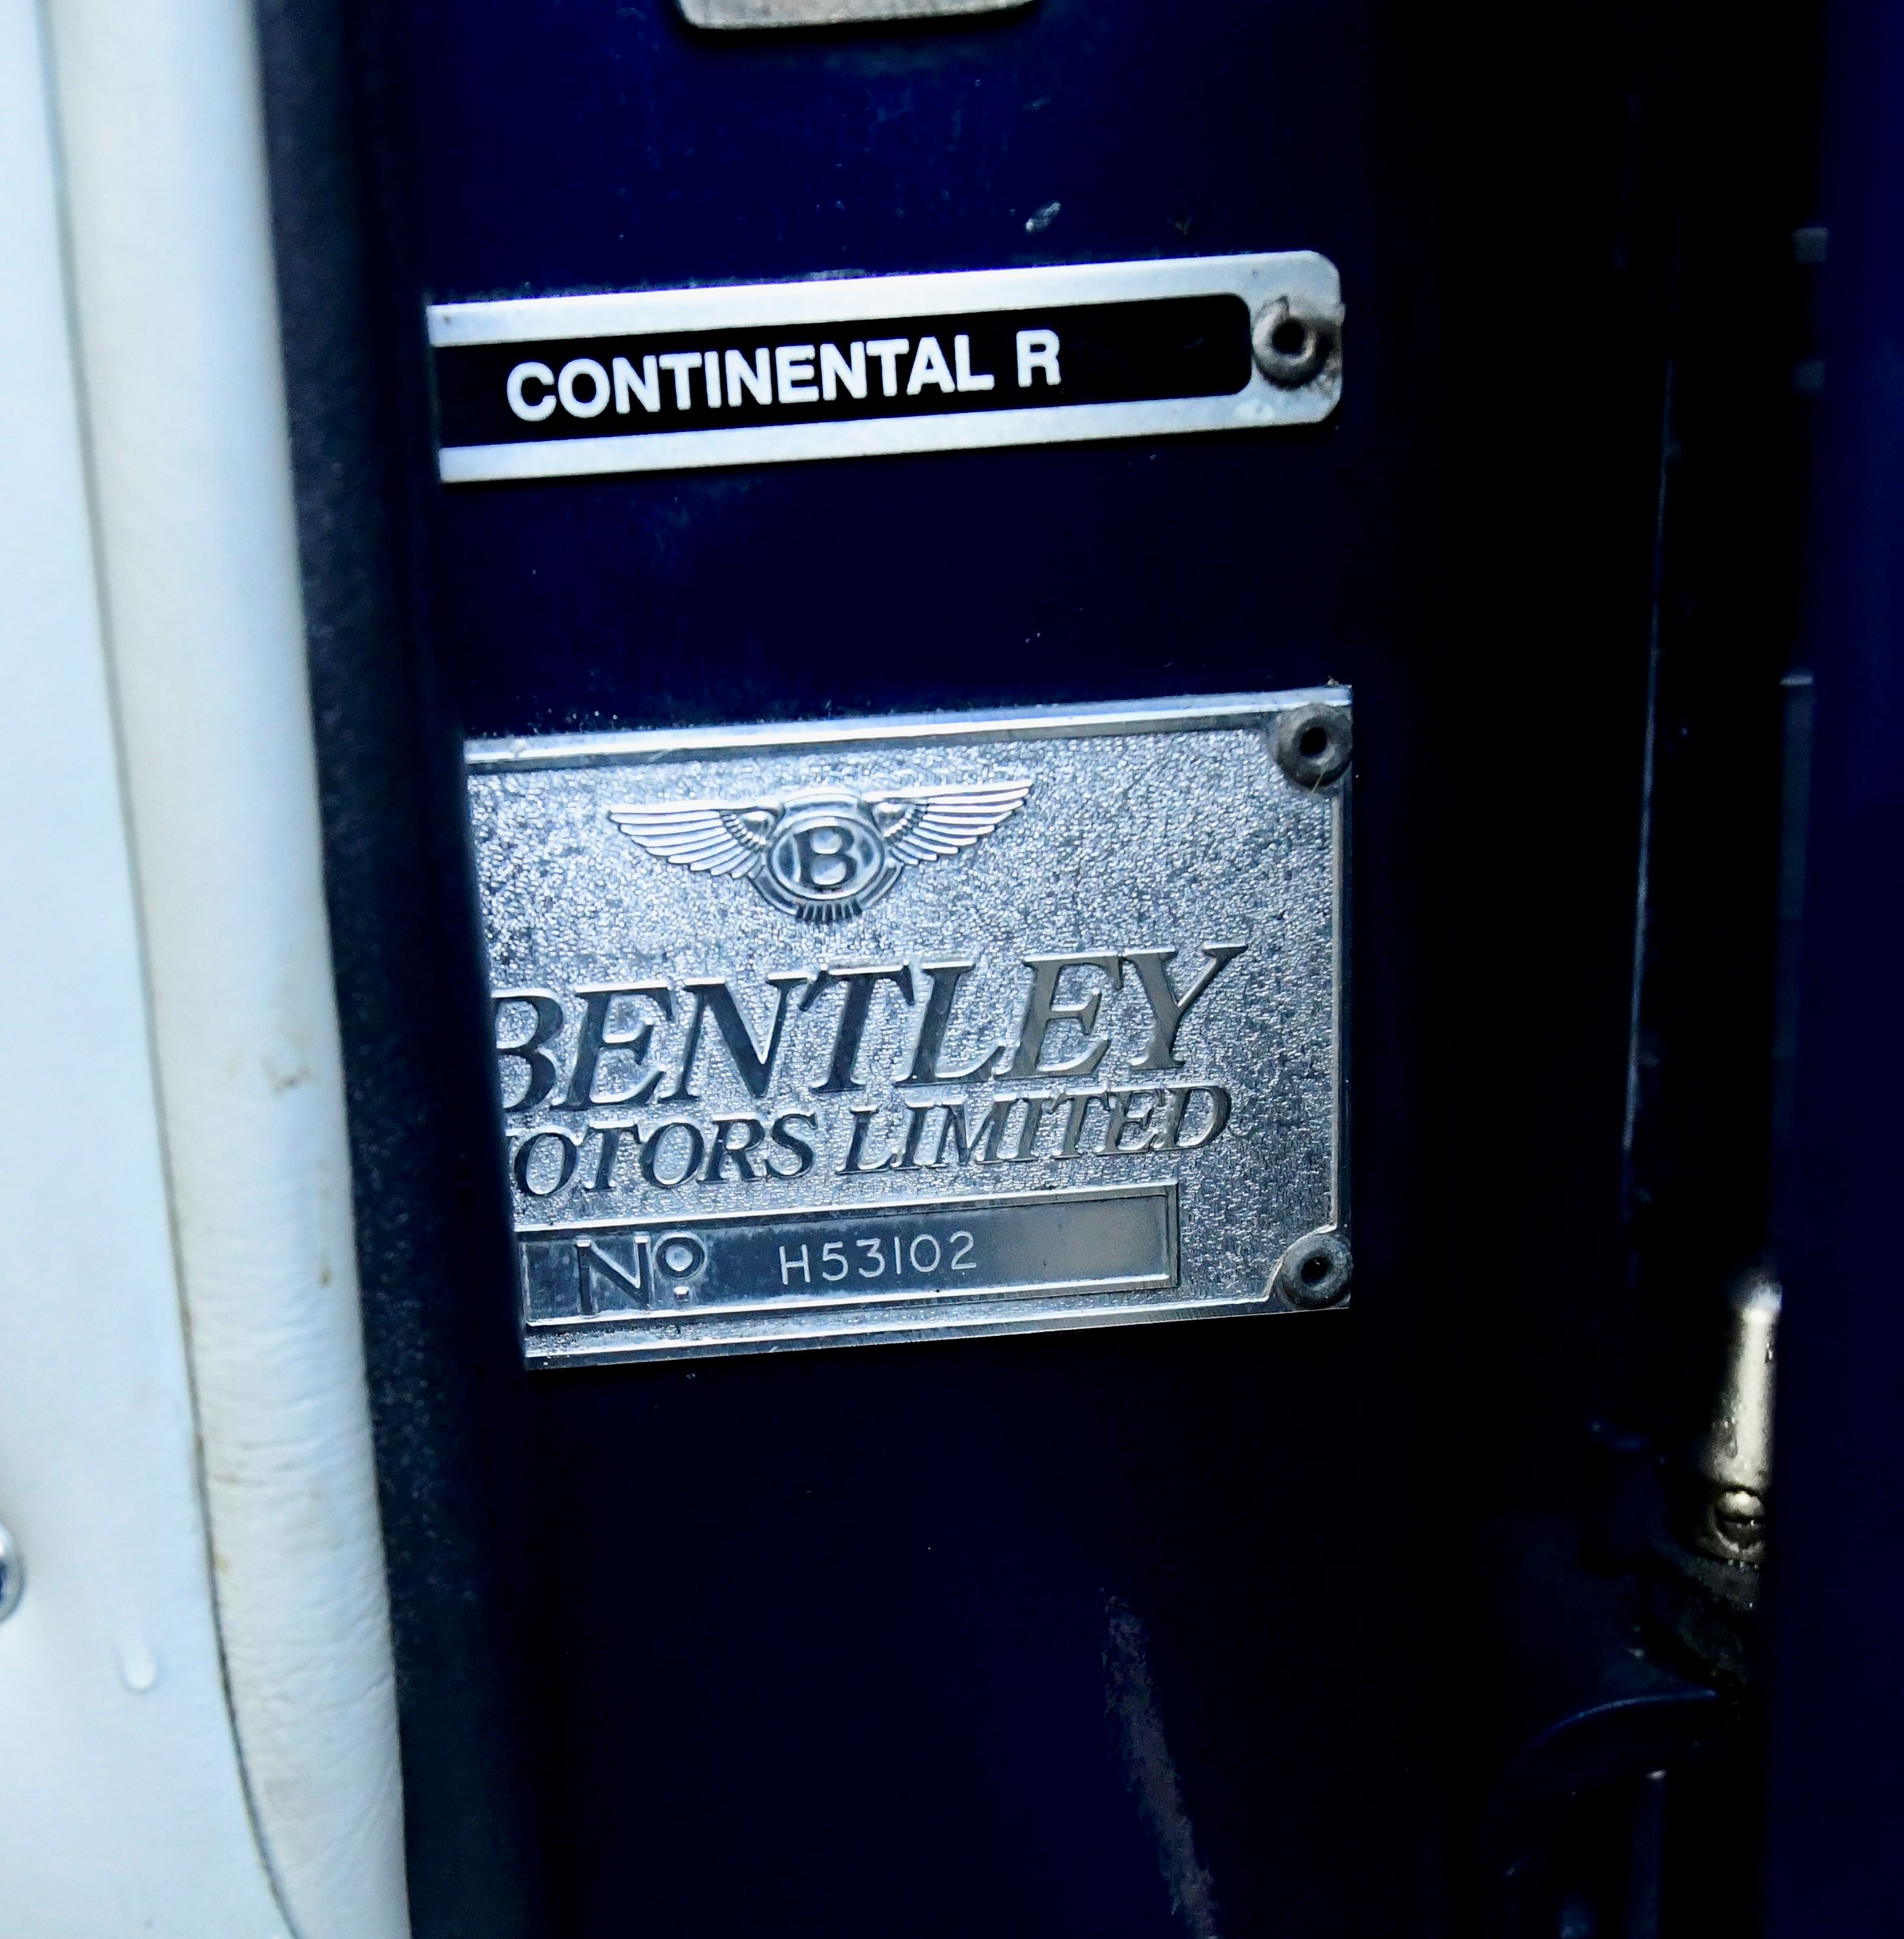 Bentley continental r vmzi4o7kra8mu36mjemtp